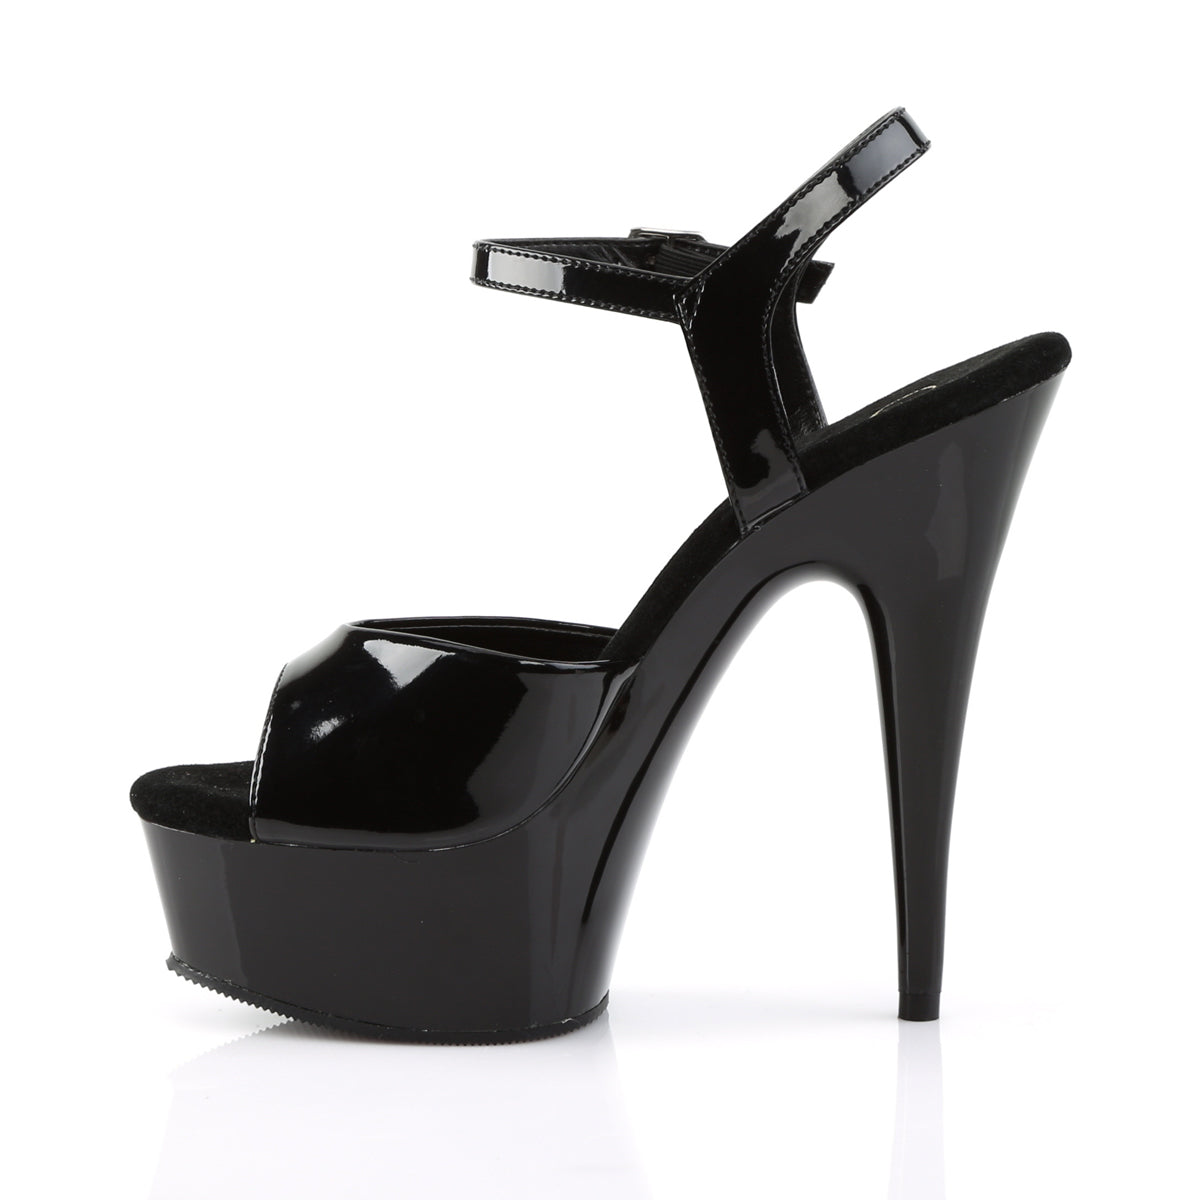 DELIGHT-609 6" Heel Black Patent Pole Dancing Platforms-Pleaser- Sexy Shoes Pole Dance Heels